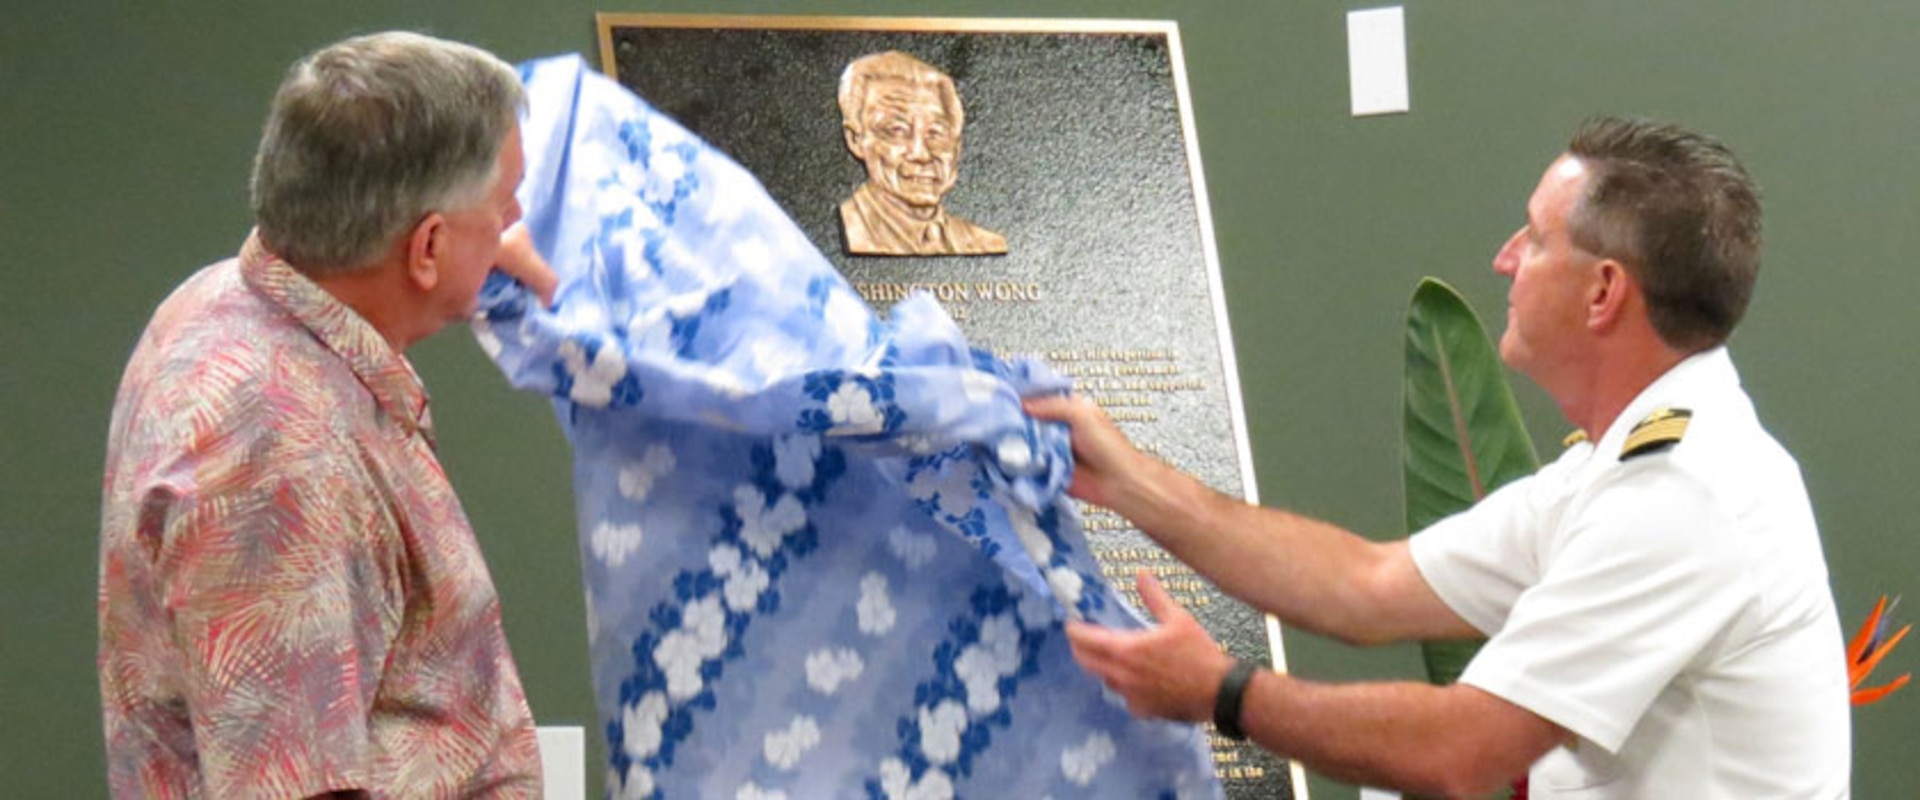 NSA Deputy Director, Mr. Richard Ledgett, and NSA-Hawaii Commander, CAPT Cliff Bean, unveil dedication plaque for Washington Wong